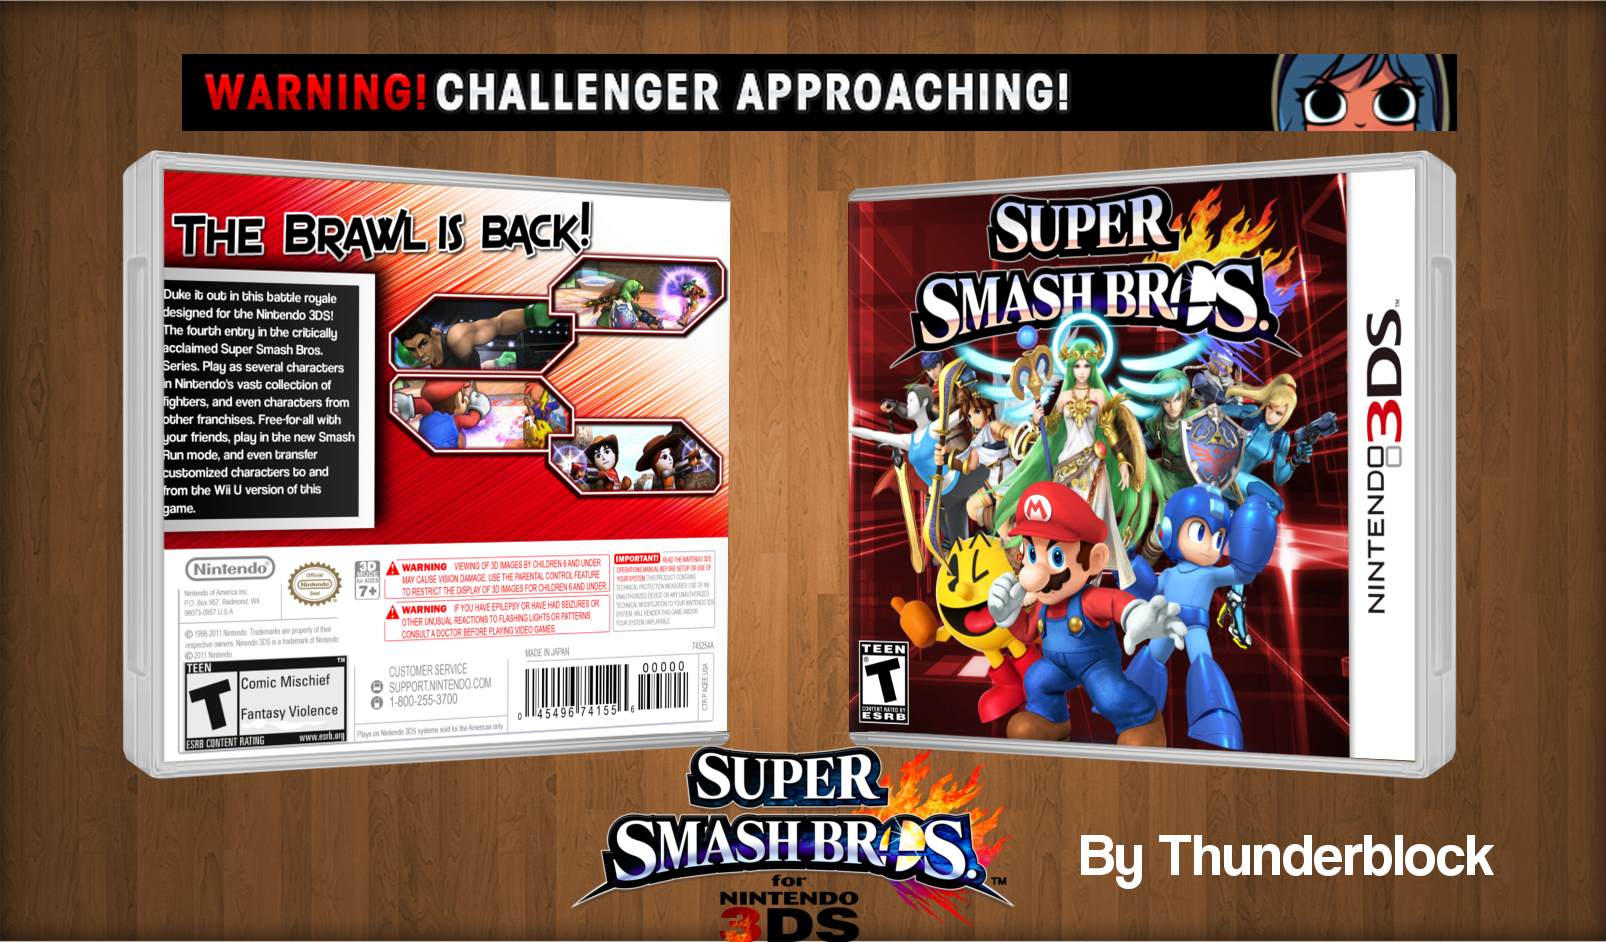 Super Smash Bros. For 3DS box cover